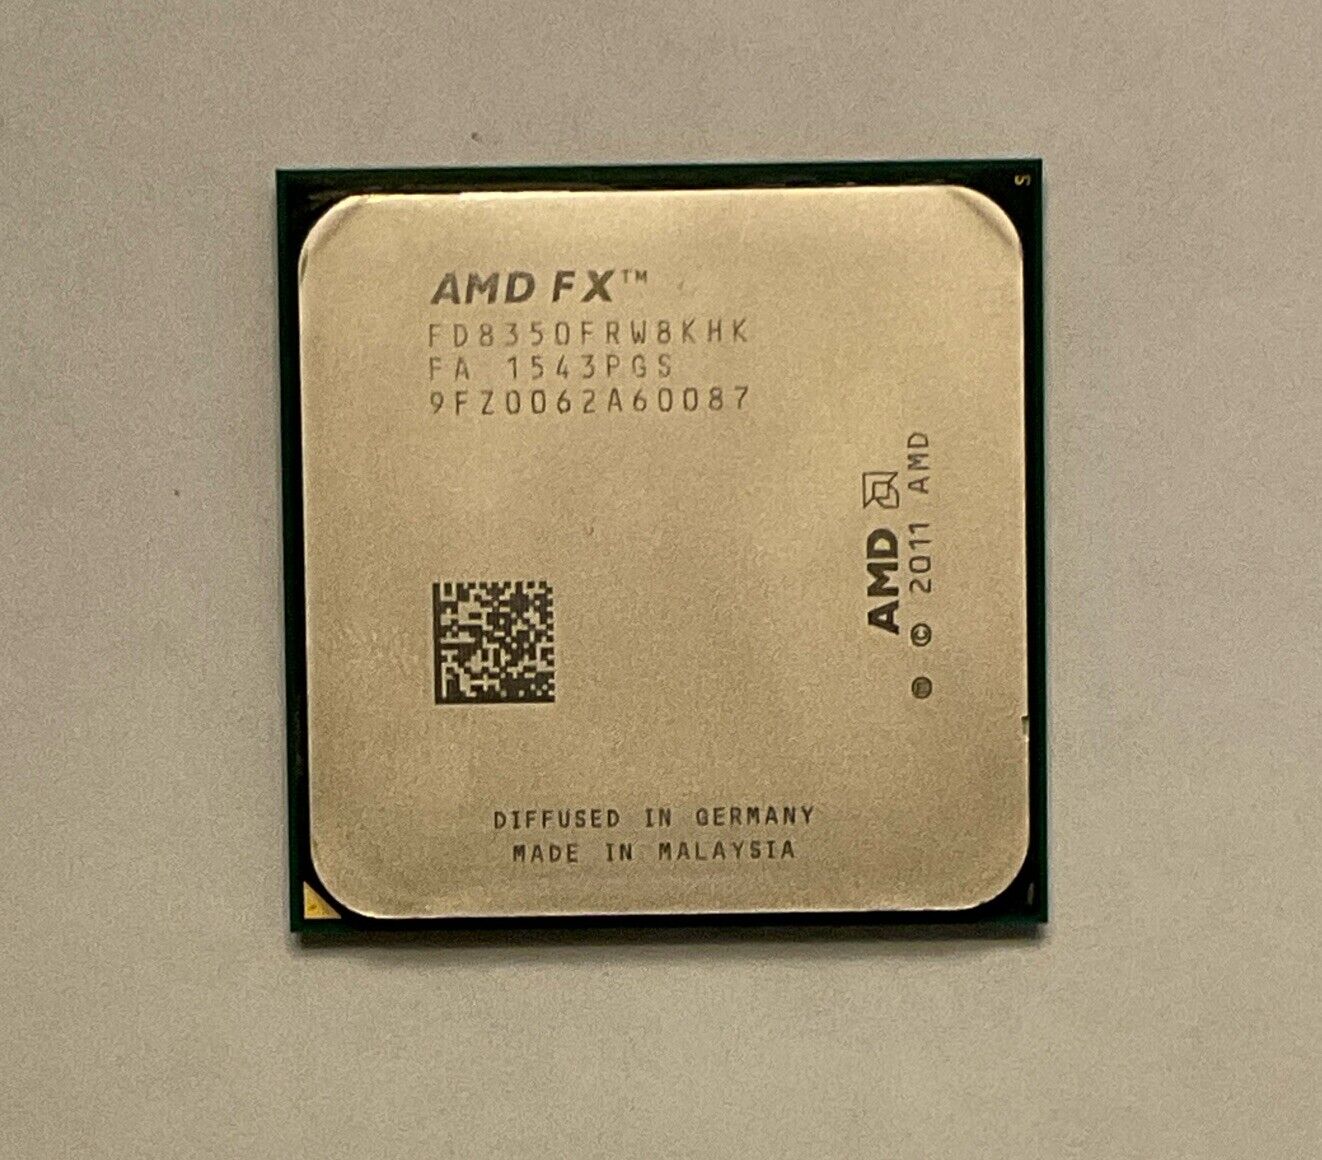 AMD FX-8350 4.00GHz Socket AM3+ Processor CPU (FD8350FRW8KHK)